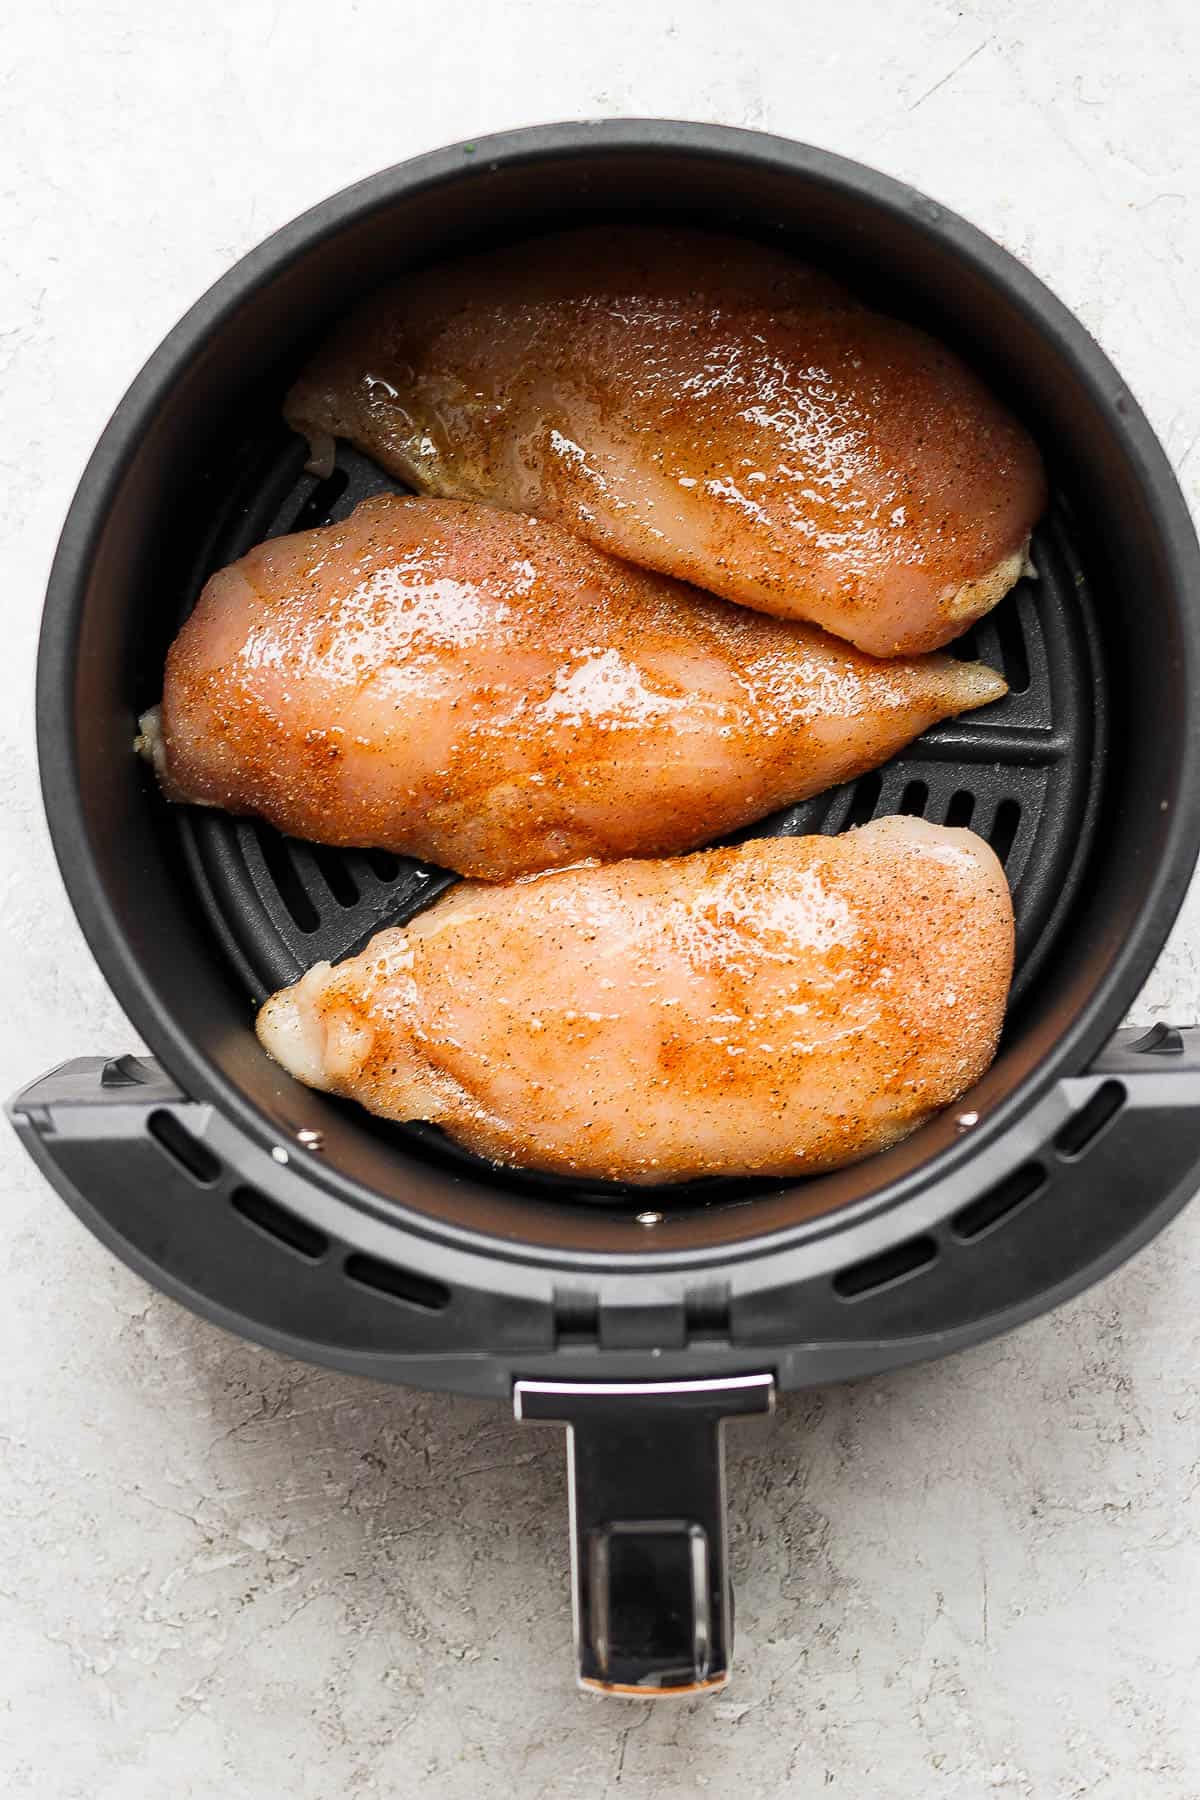 Seasoned chicken breasts in the air fryer basket.